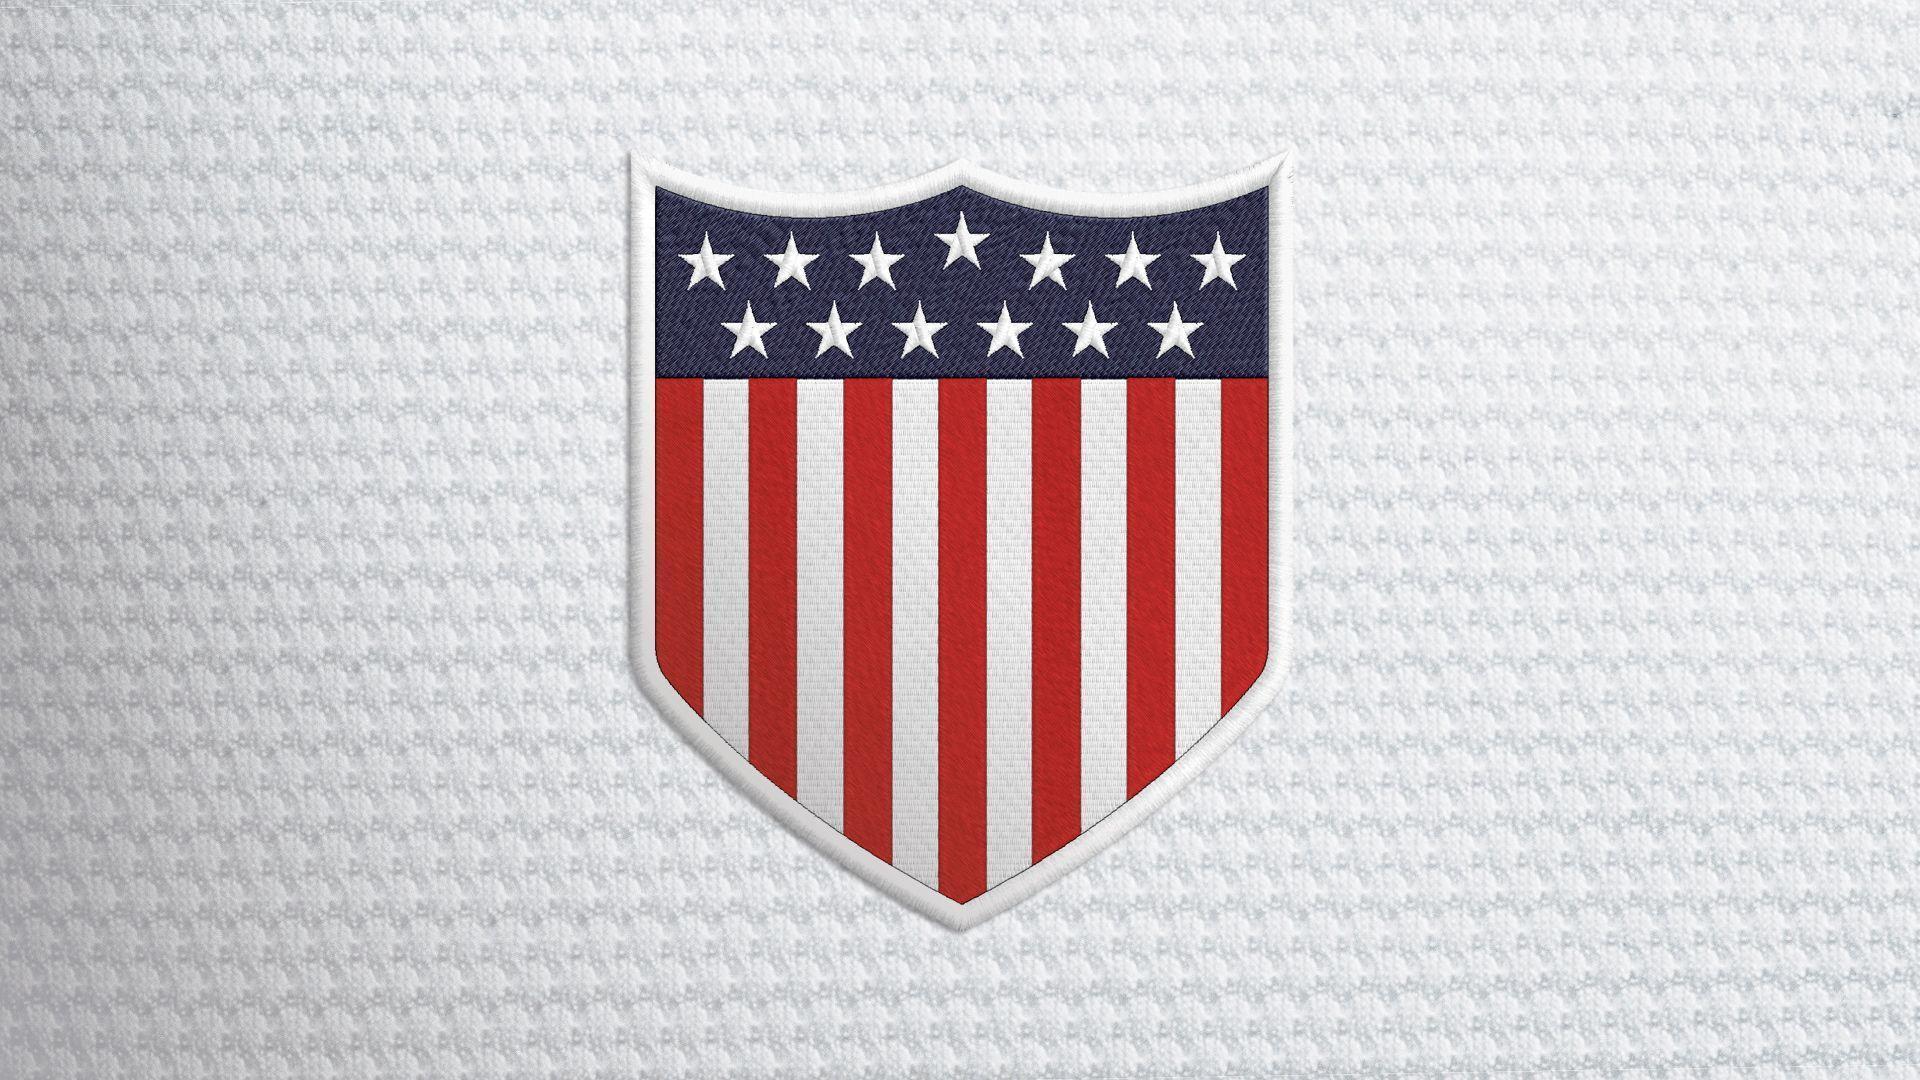 USA Soccer Wallpaper 1920x1080 px Free Download ID